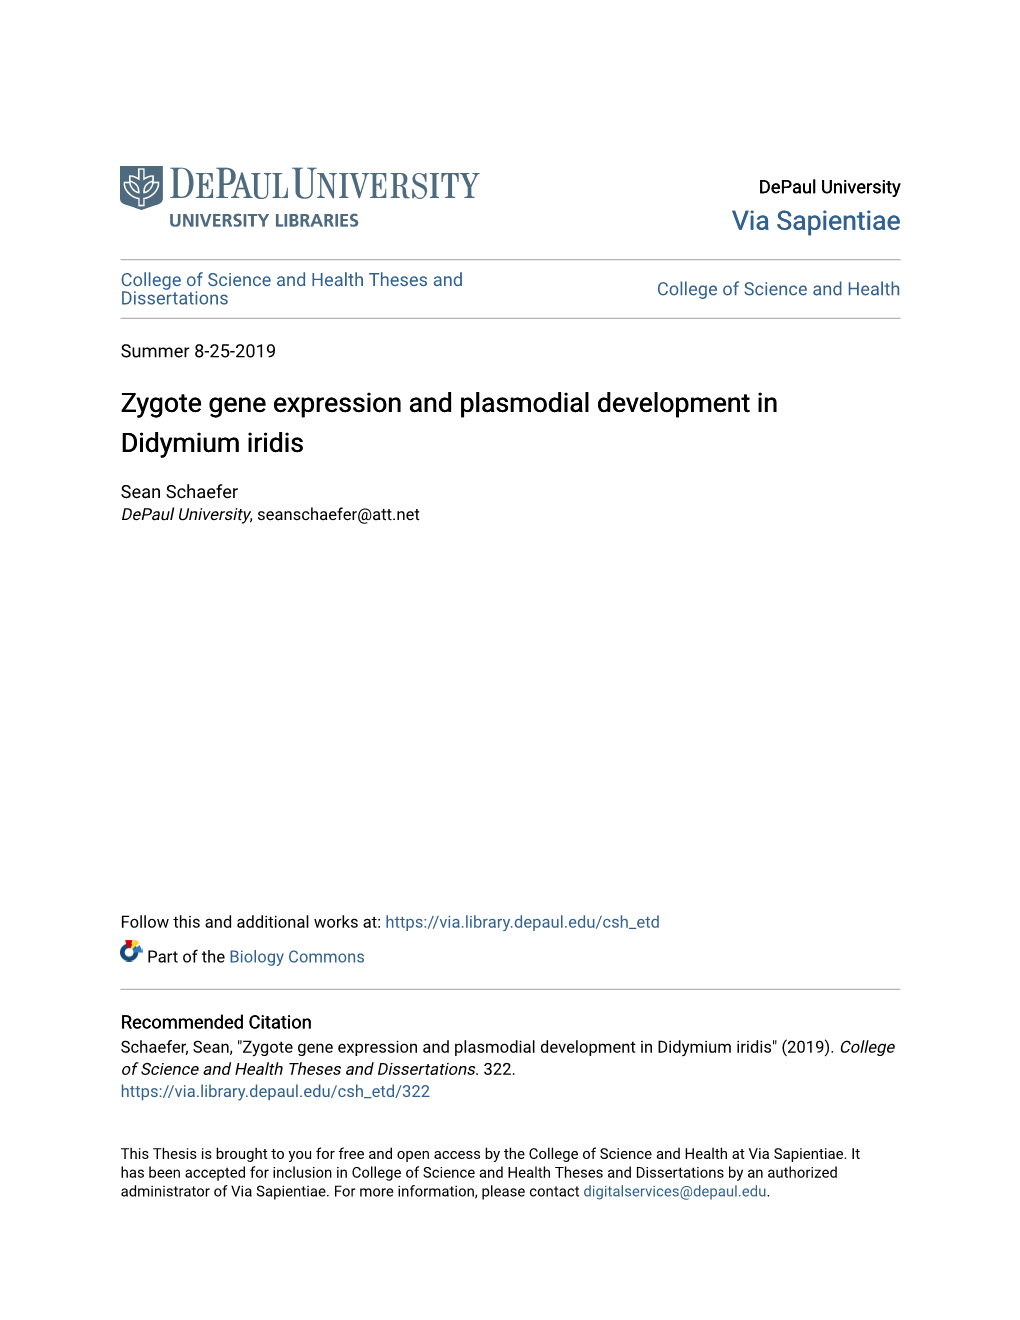 Zygote Gene Expression and Plasmodial Development in Didymium Iridis